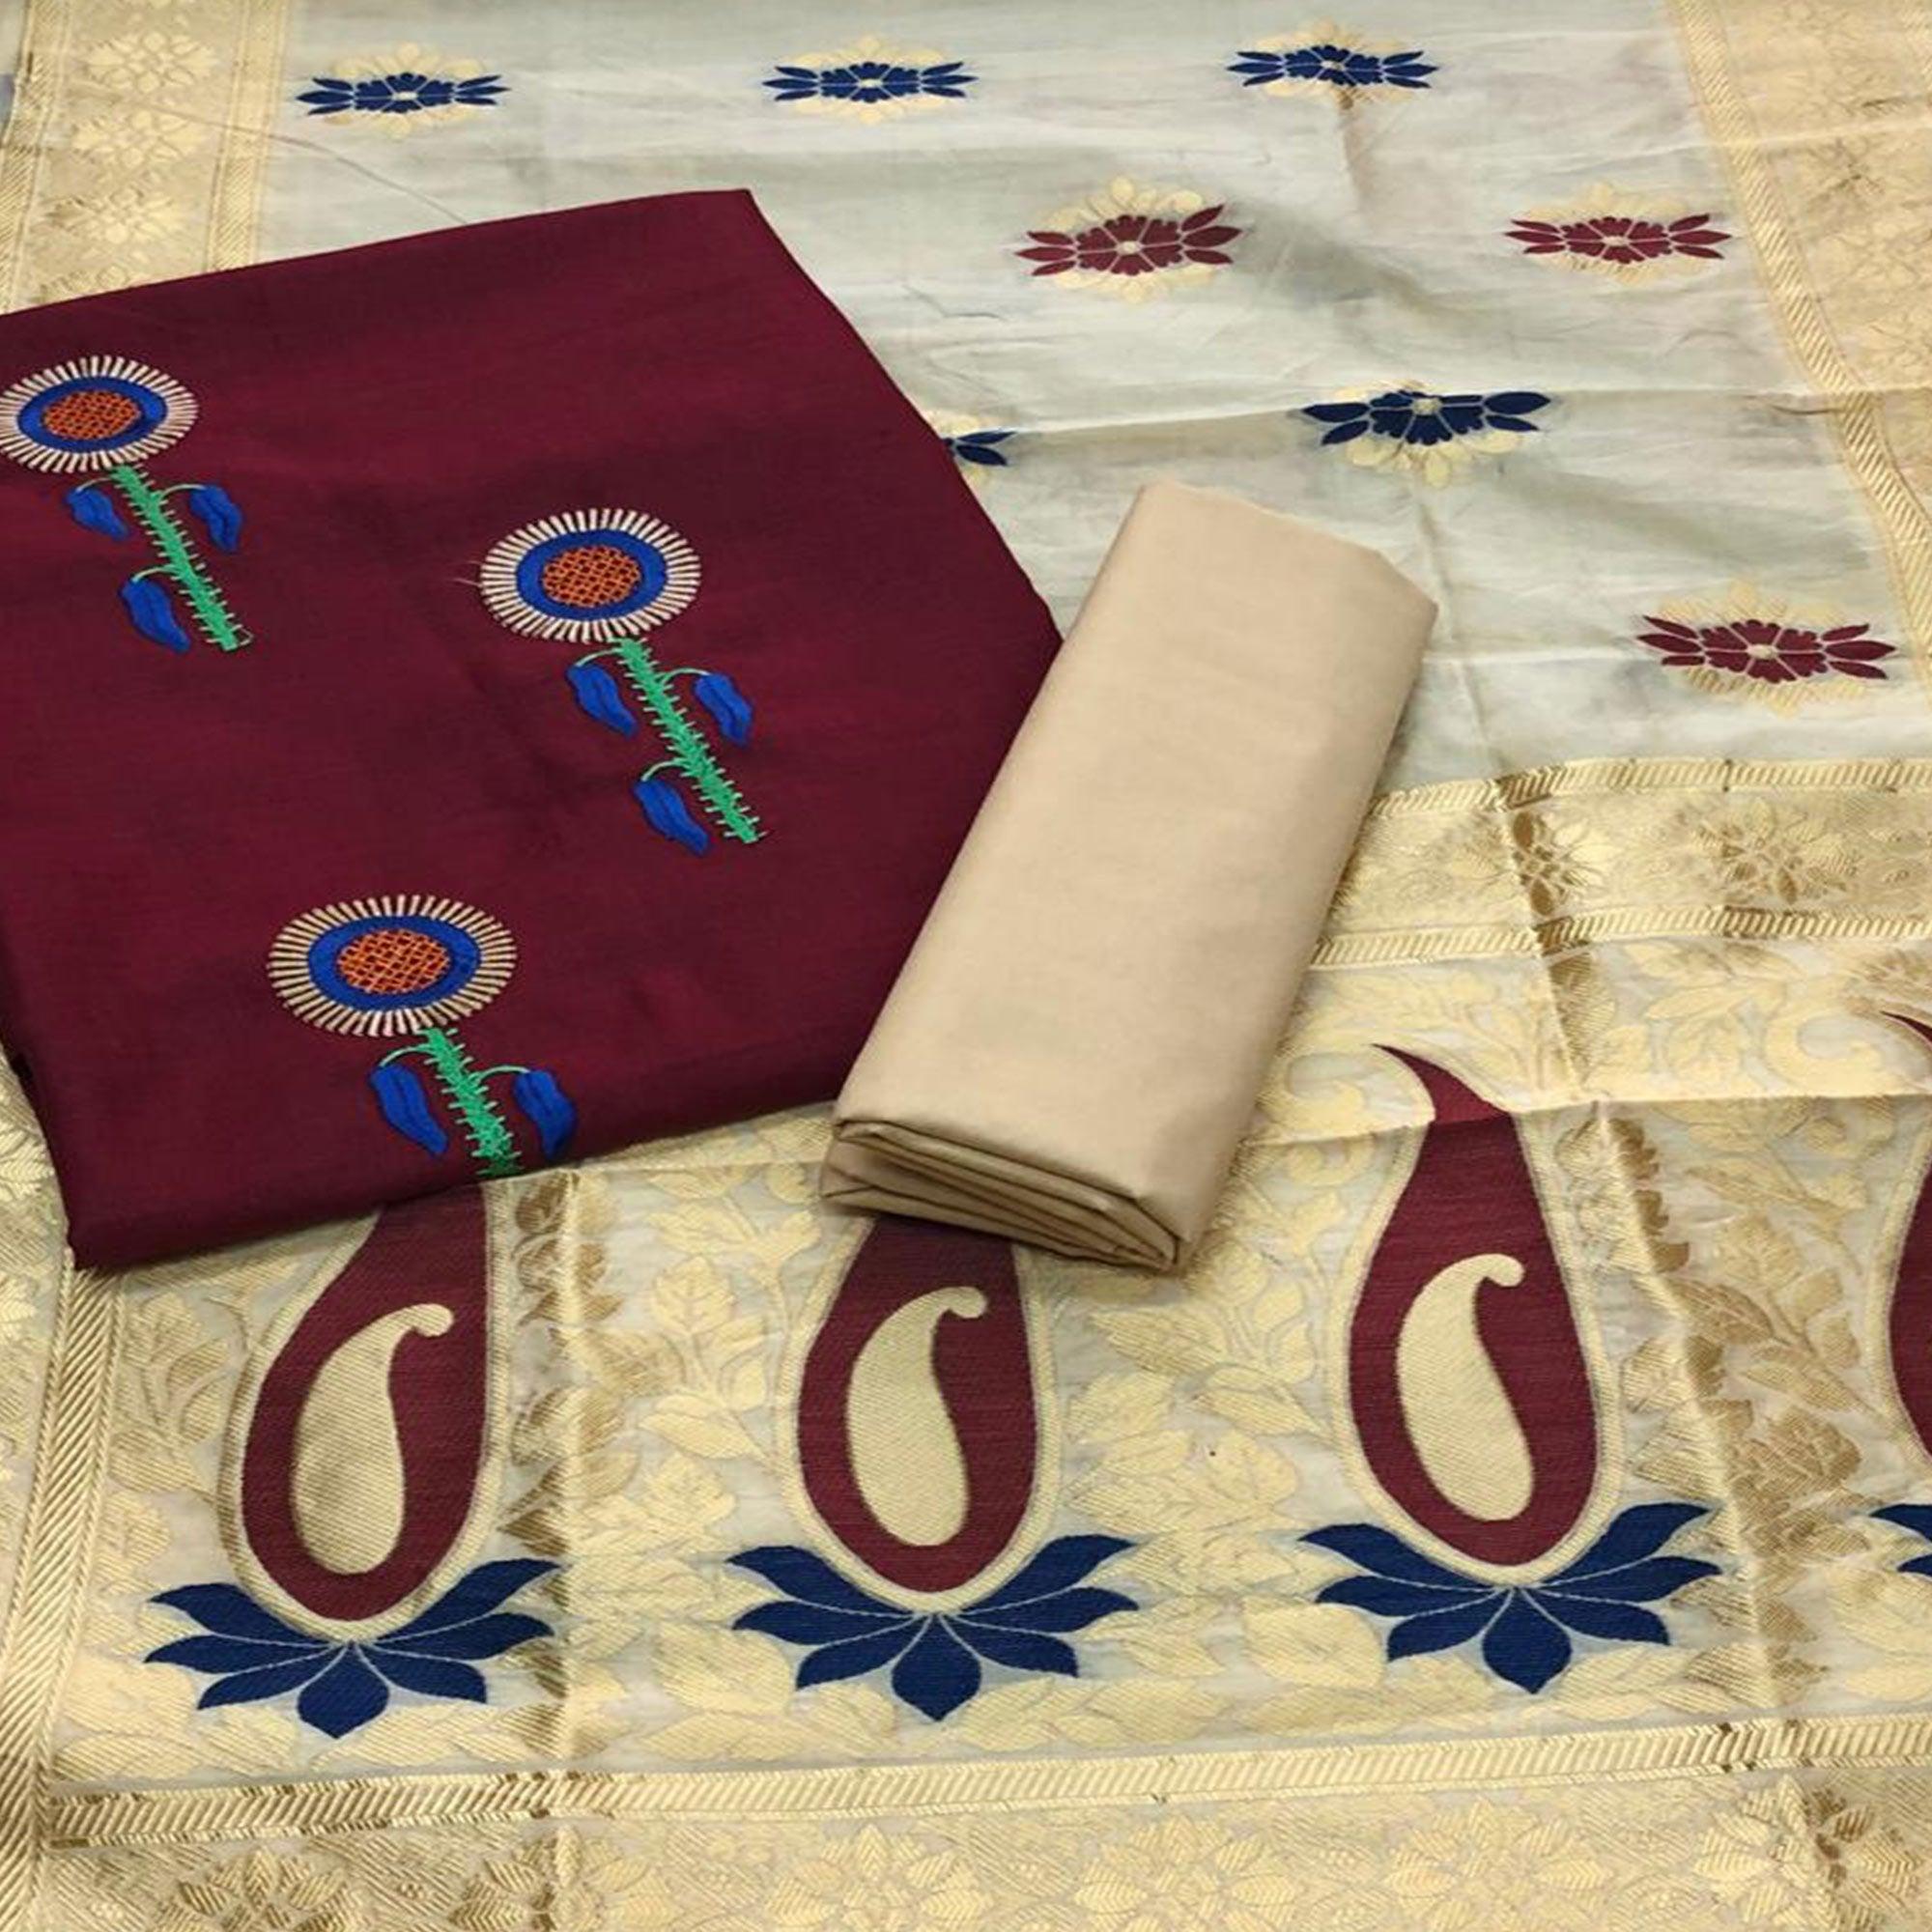 Unique Maroon Colored Casual Wear Embroidered Cotton Dress Material With Banarasi Silk Dupatta - Peachmode